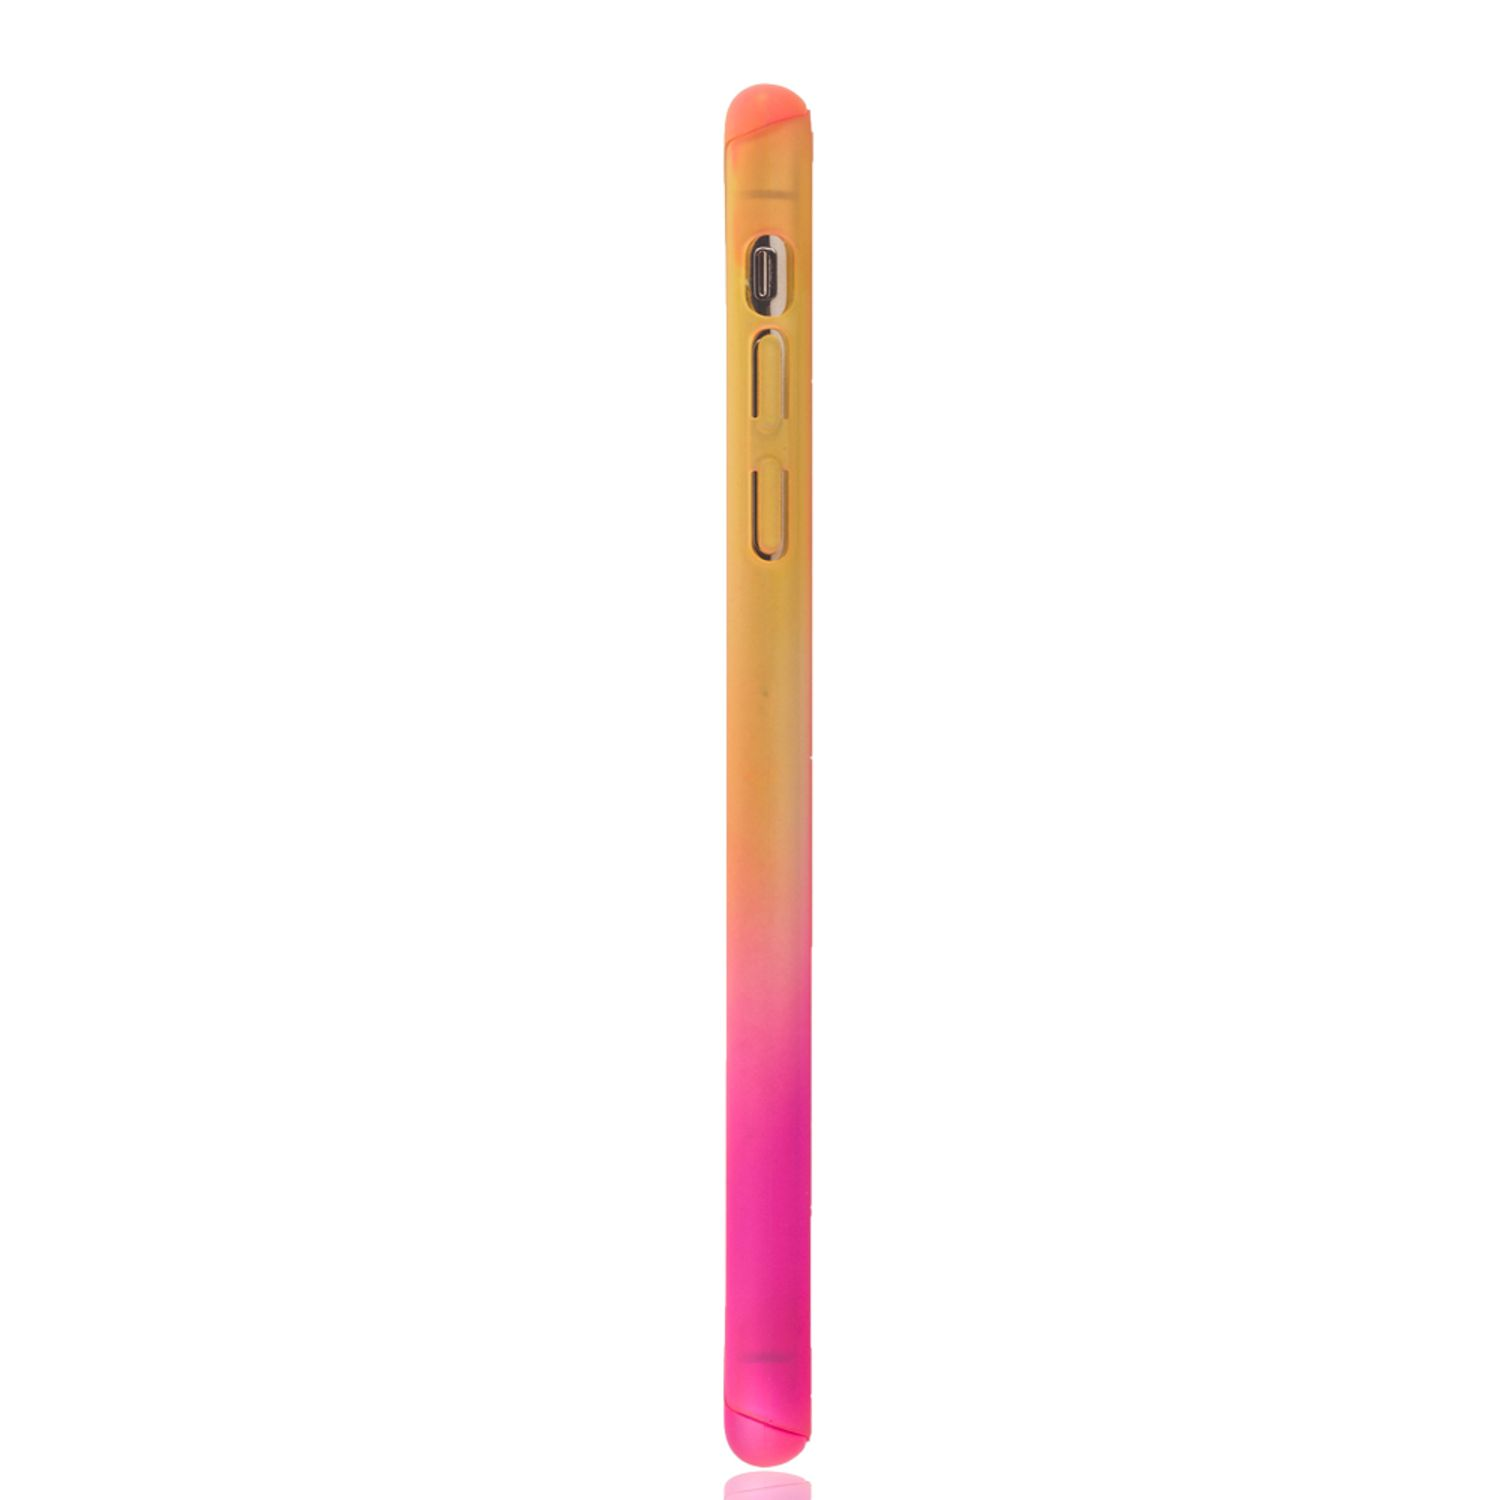 Schutzhülle, Cover, Full Apple, KÖNIG DESIGN XS Mehrfarbig iPhone Max,